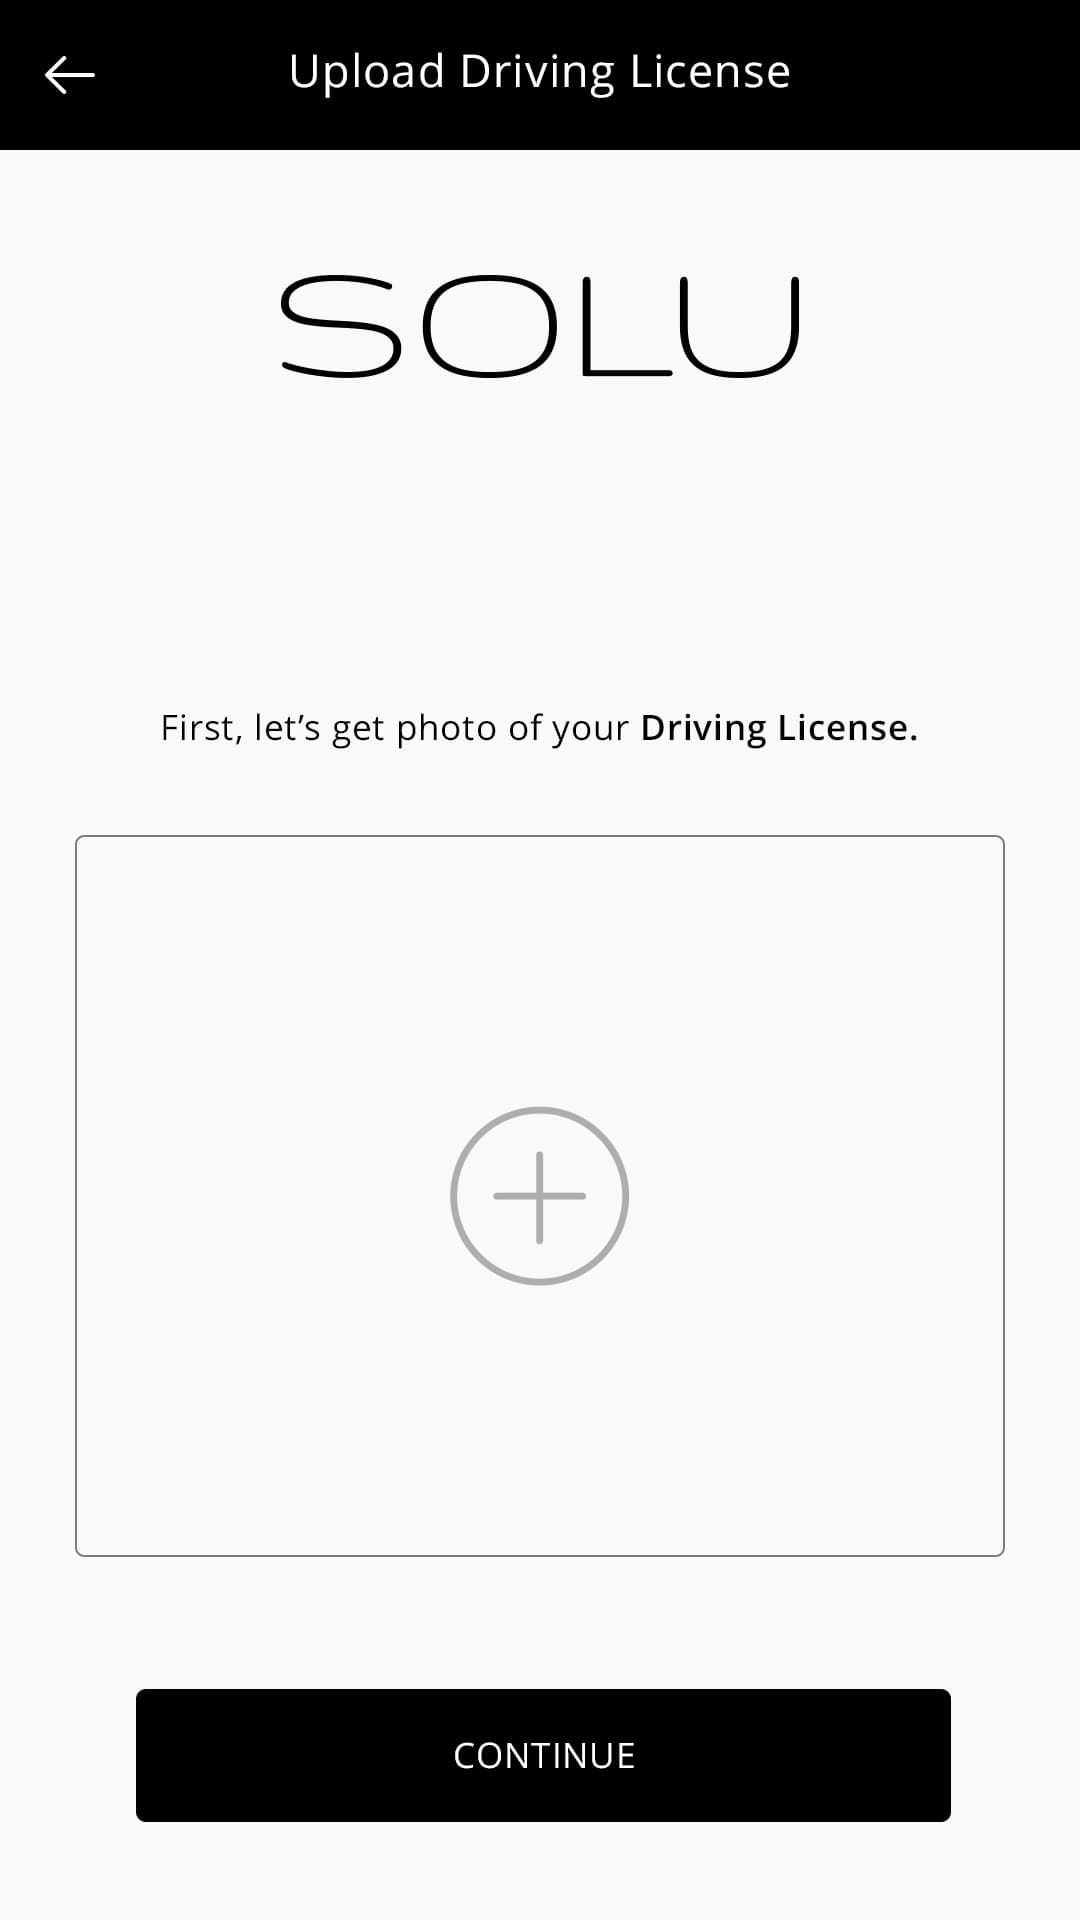 Solu (ride sharing app) Upload Driving Licence screen